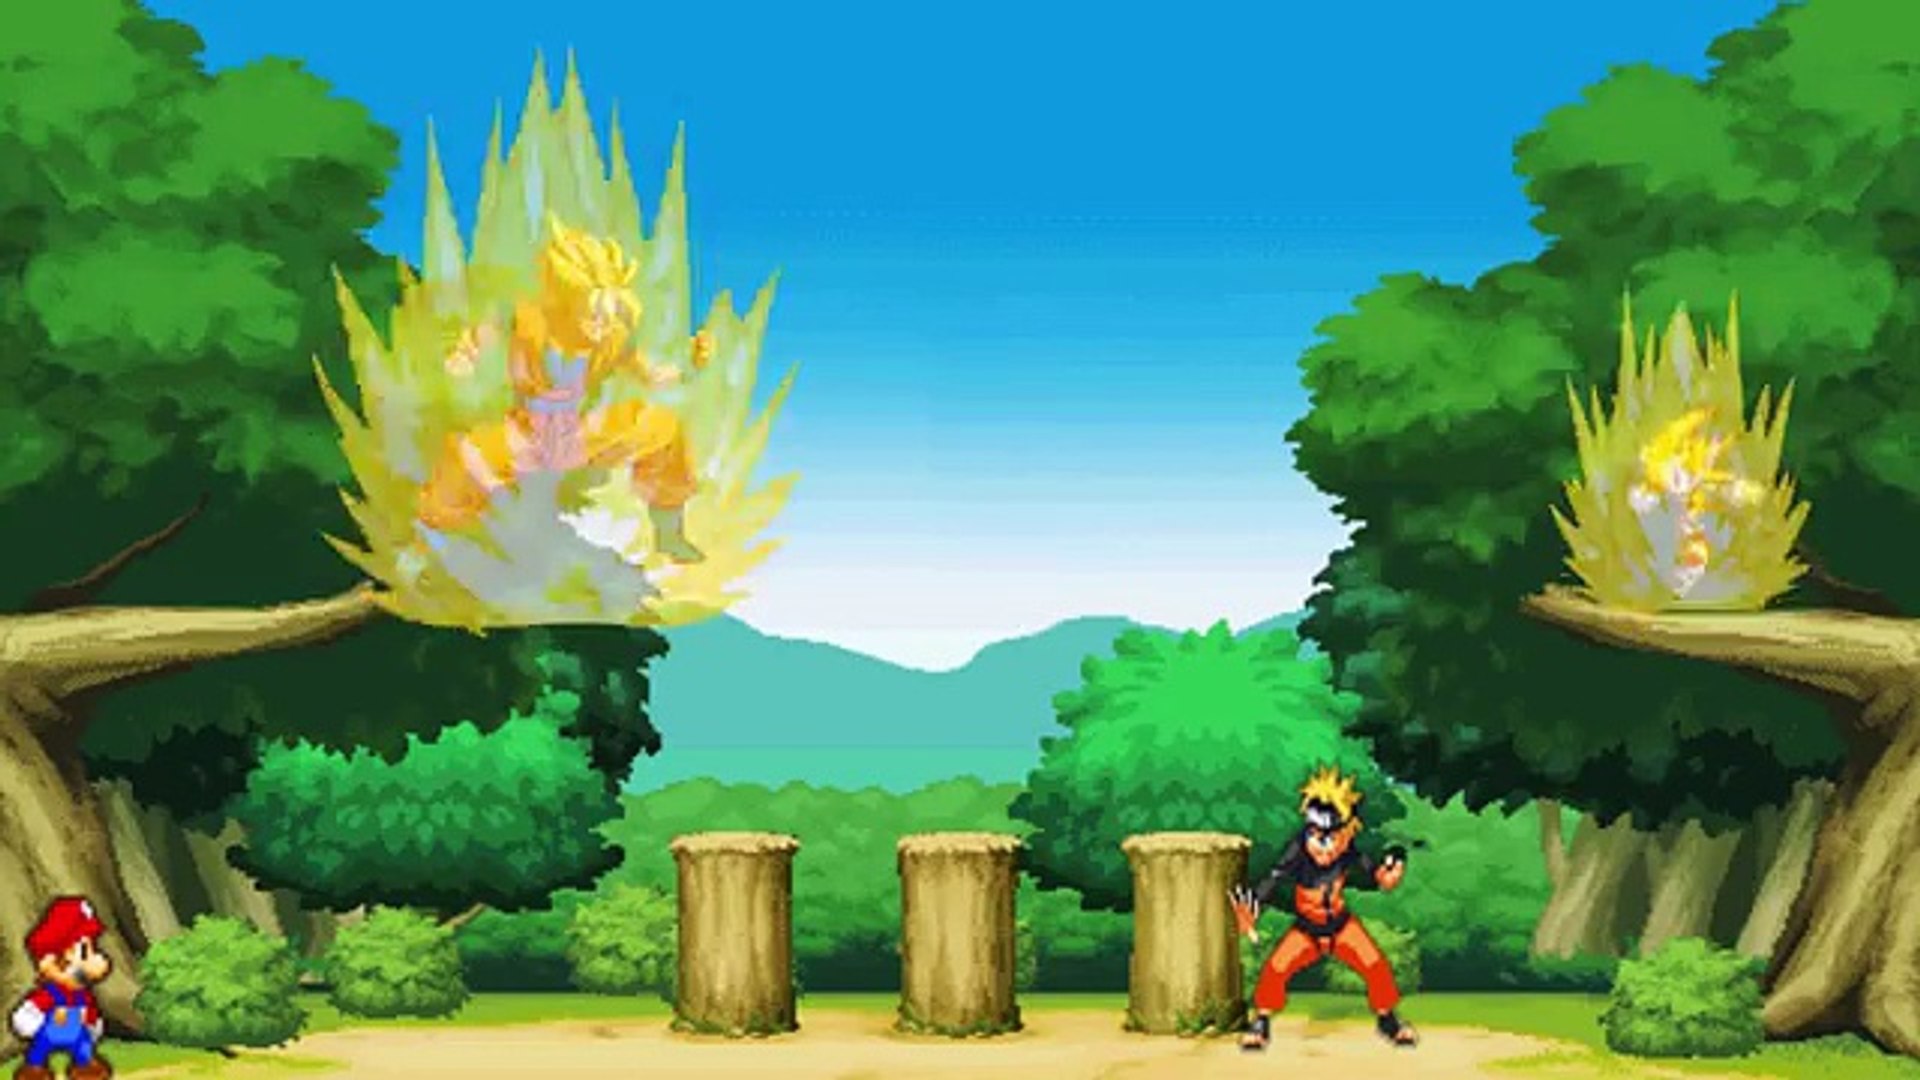 Goku & Naruto vs Sonic & Mario [Anime VS Video Games] - video Dailymotion